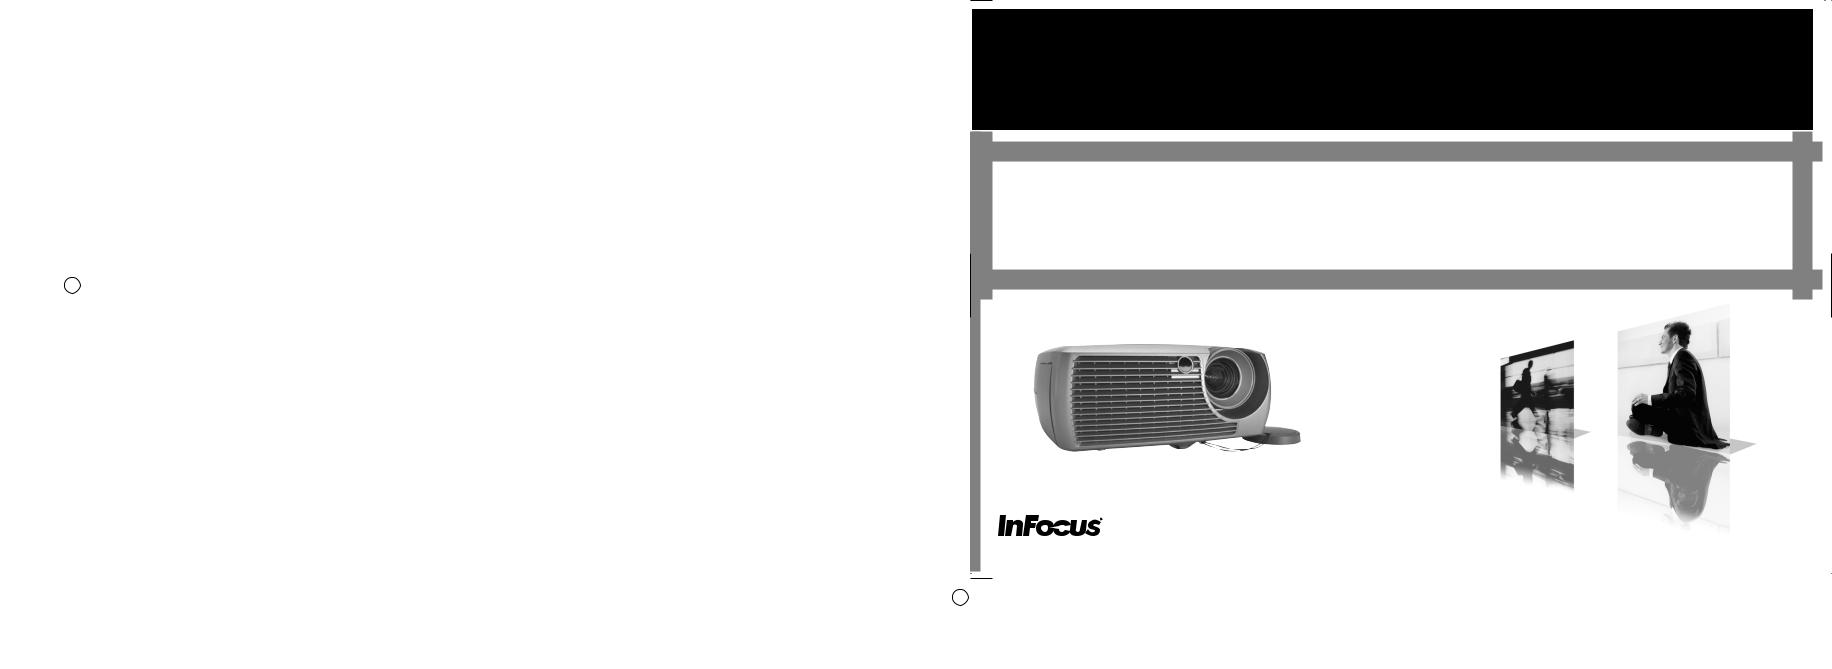 InFocus X2 User Manual